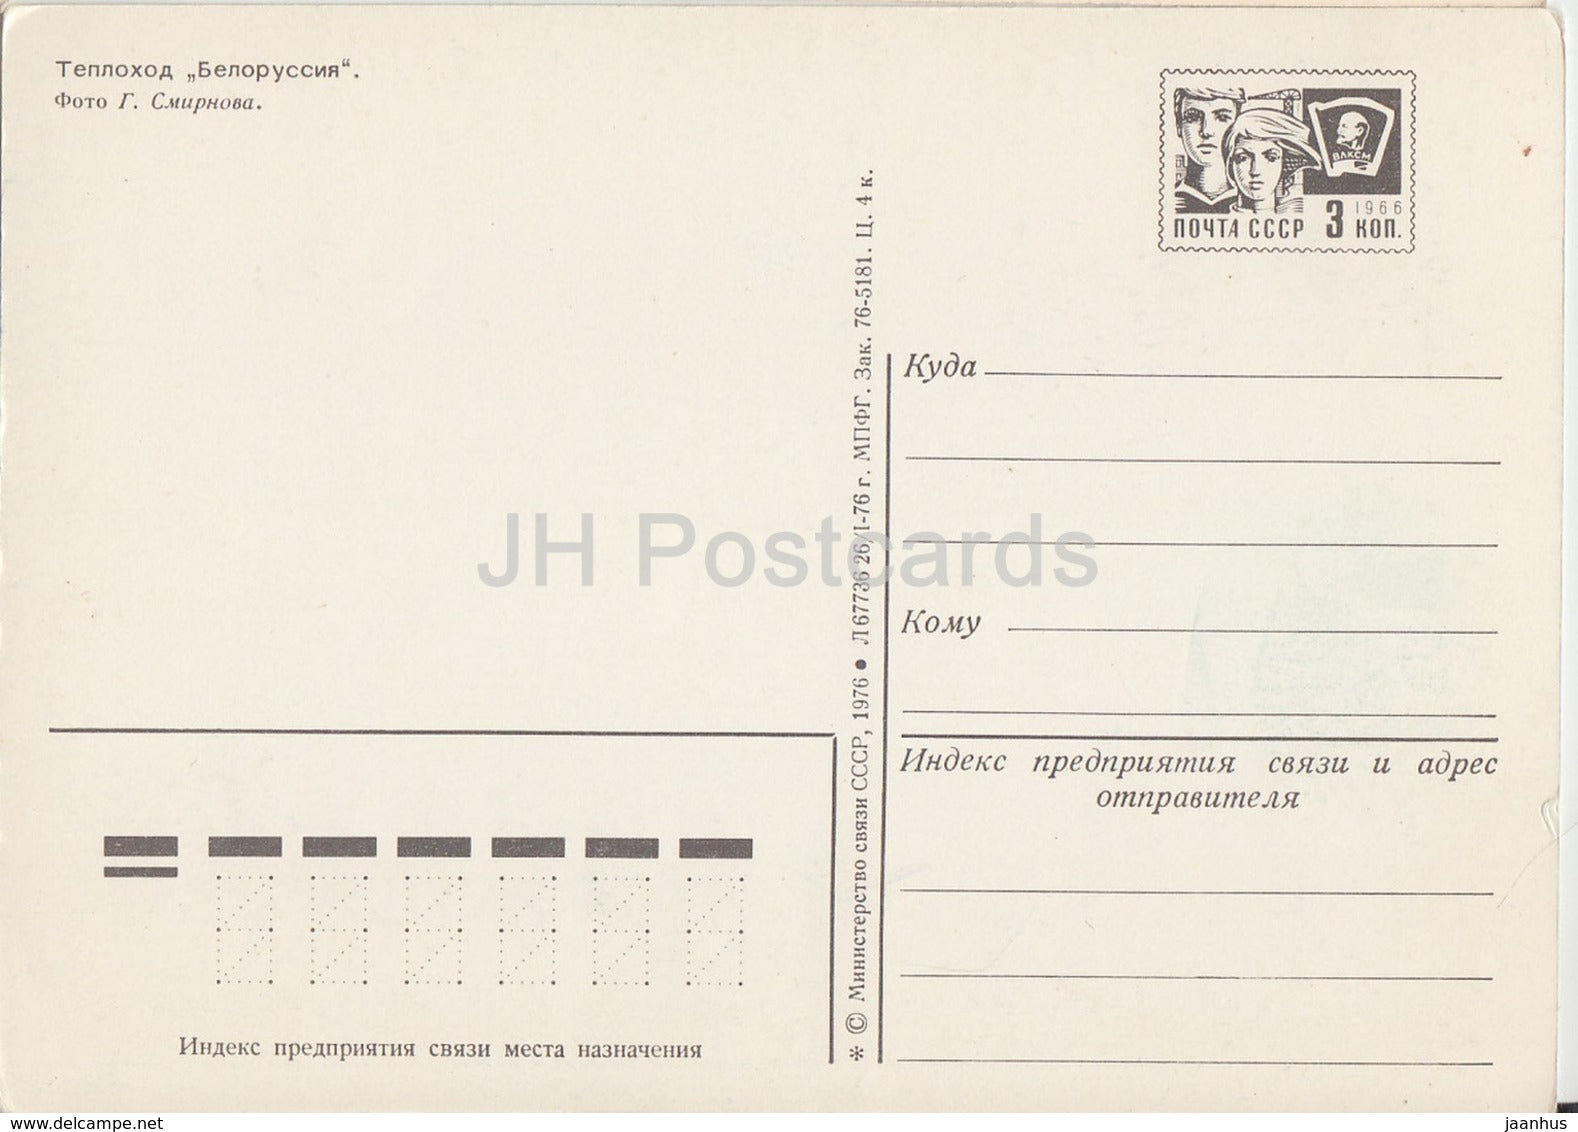 Belorussia - Belarus - motor ship - postal stationery - 1976 - Russia USSR - unused - JH Postcards